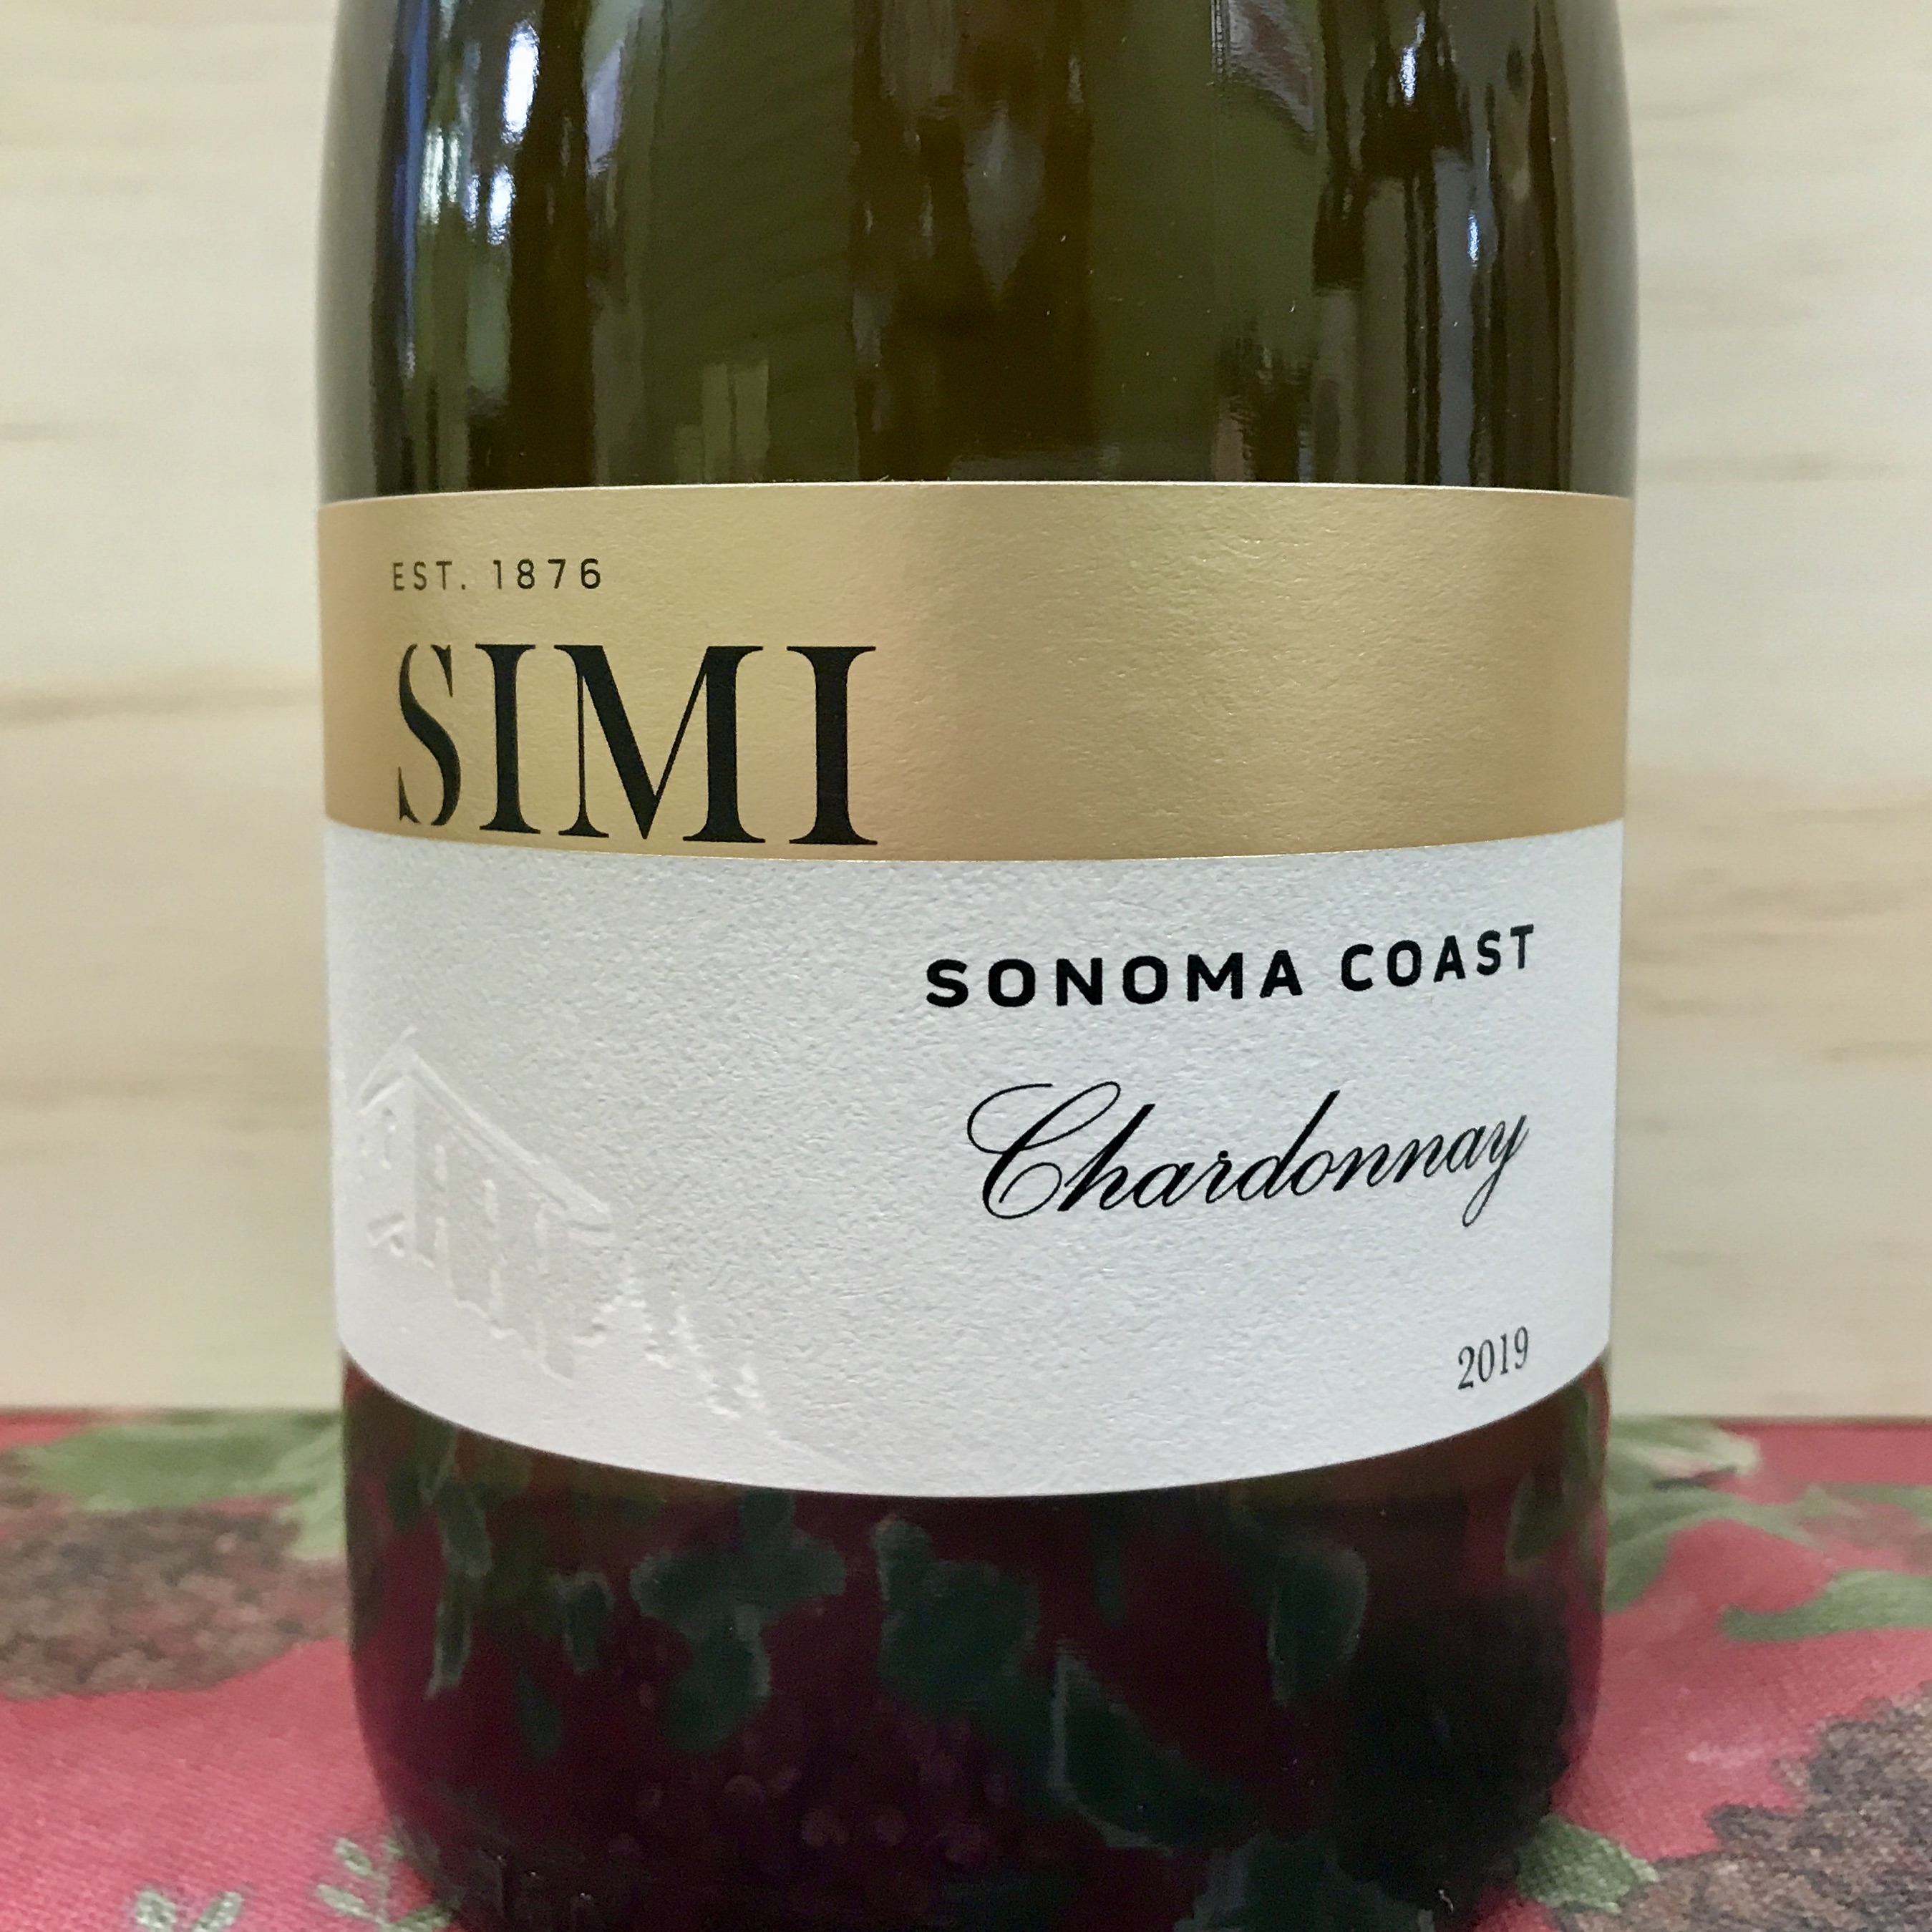 Simi Sonoma Coast Chardonnay 2019